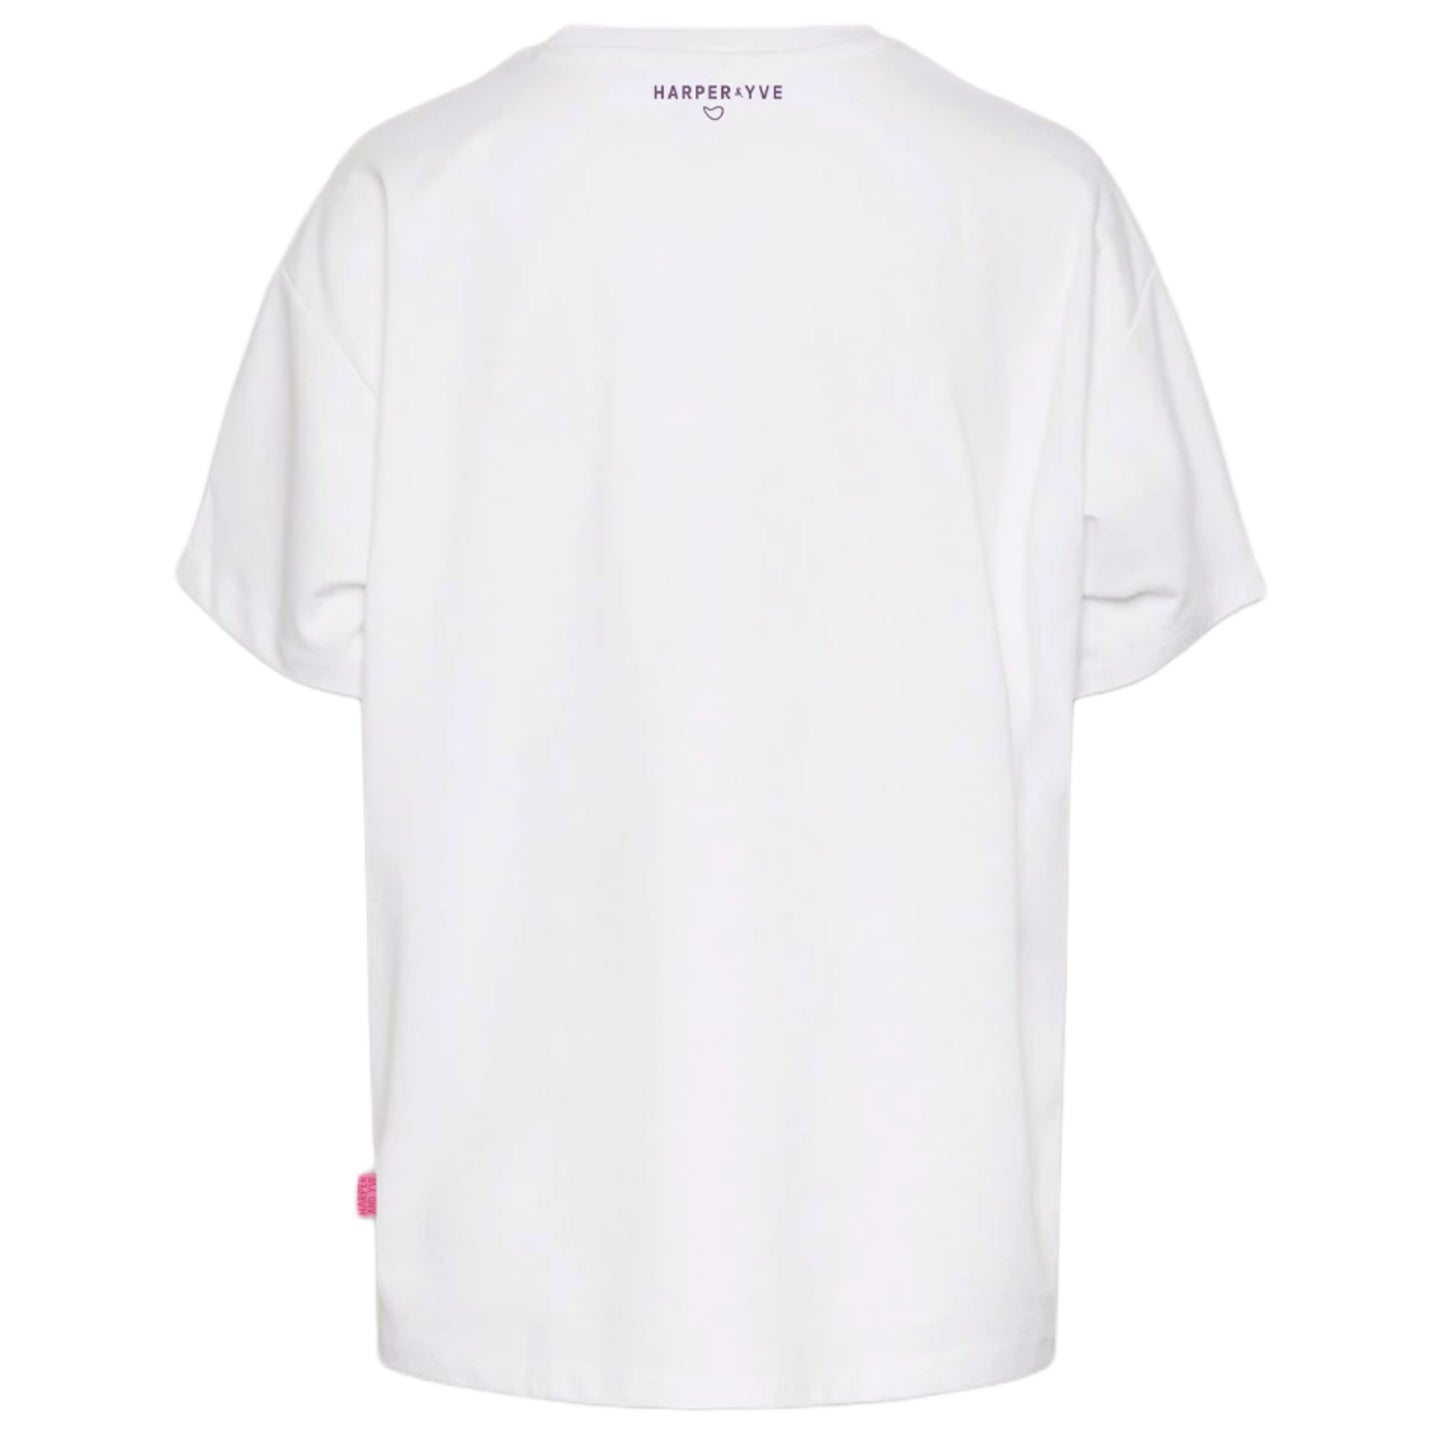 Harper & Yve T-shirt Logo Crème - Peet kleding